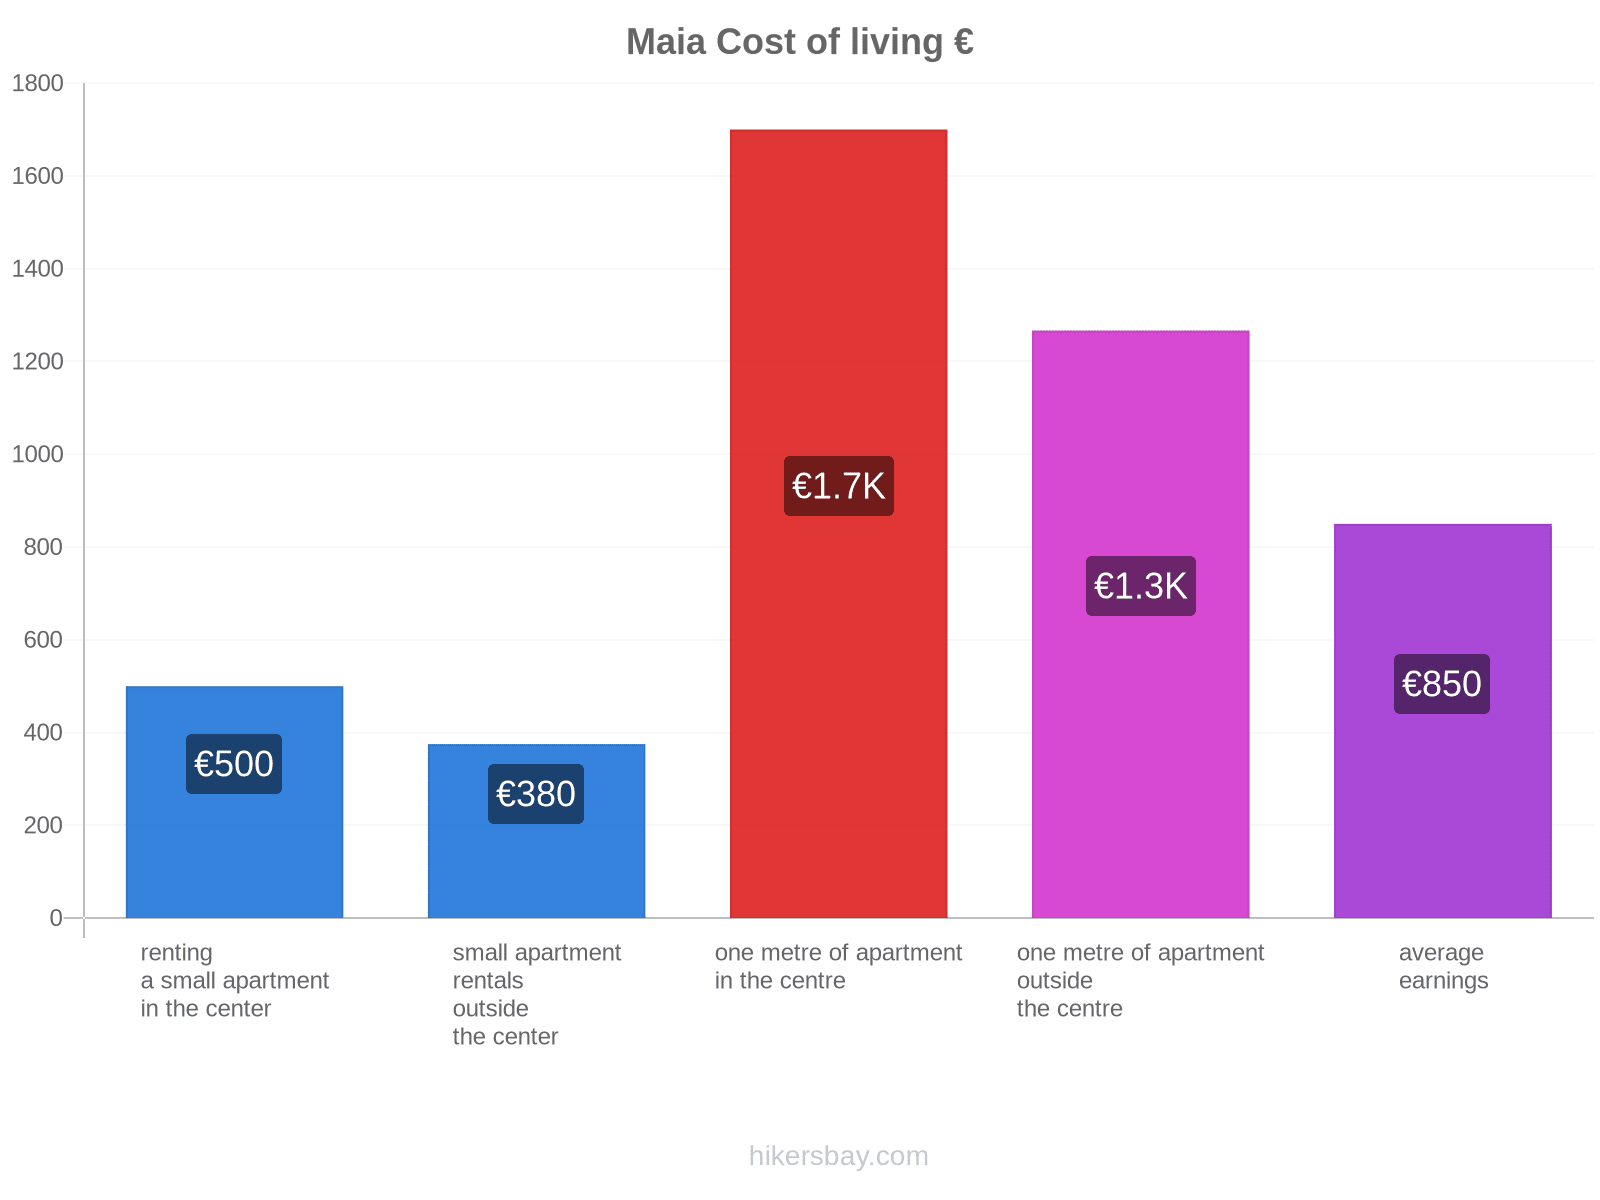 Maia cost of living hikersbay.com